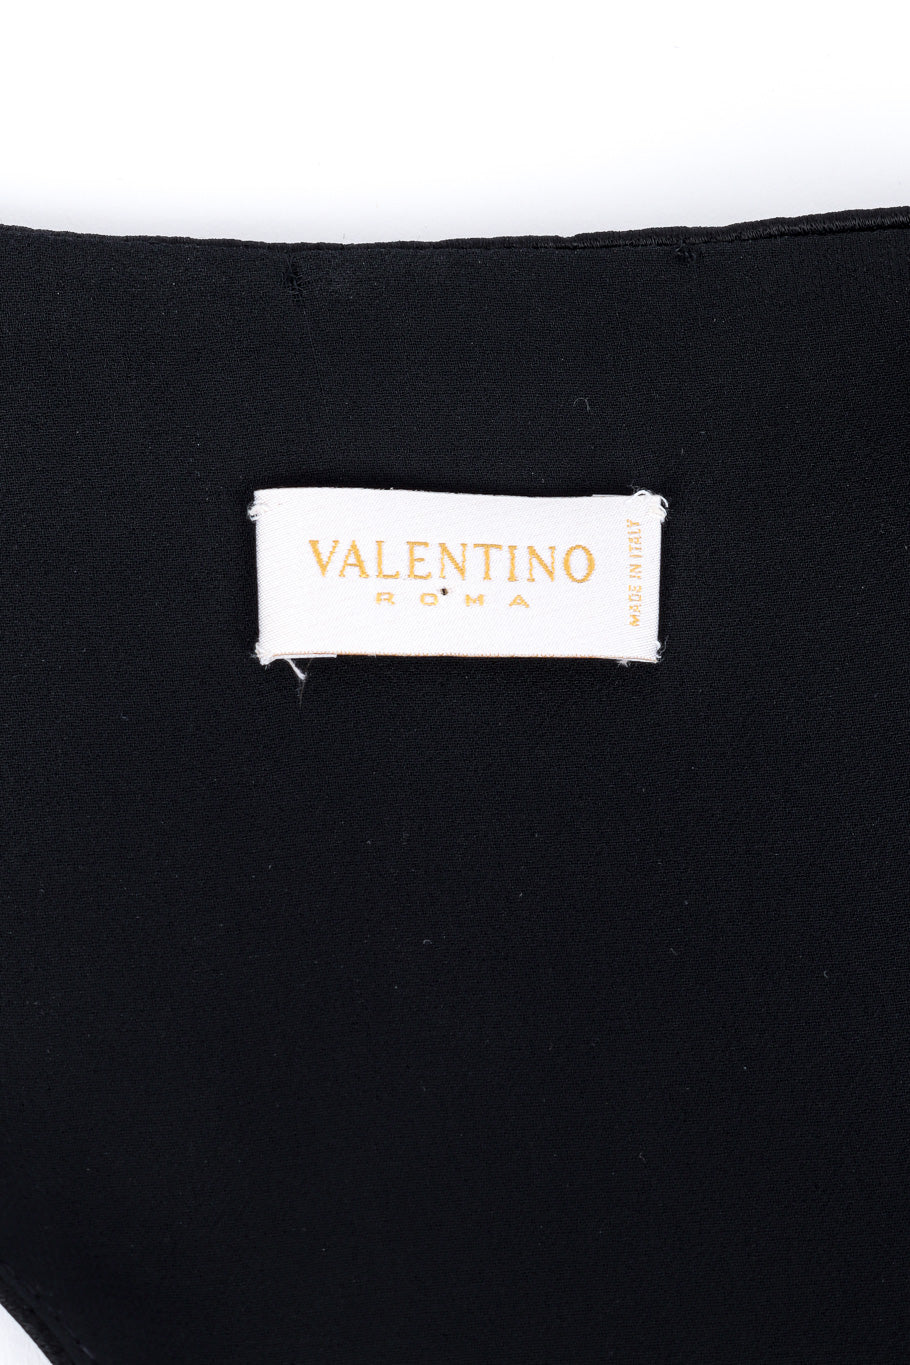 Valentino sleeveless maxi dress designer label @recessla